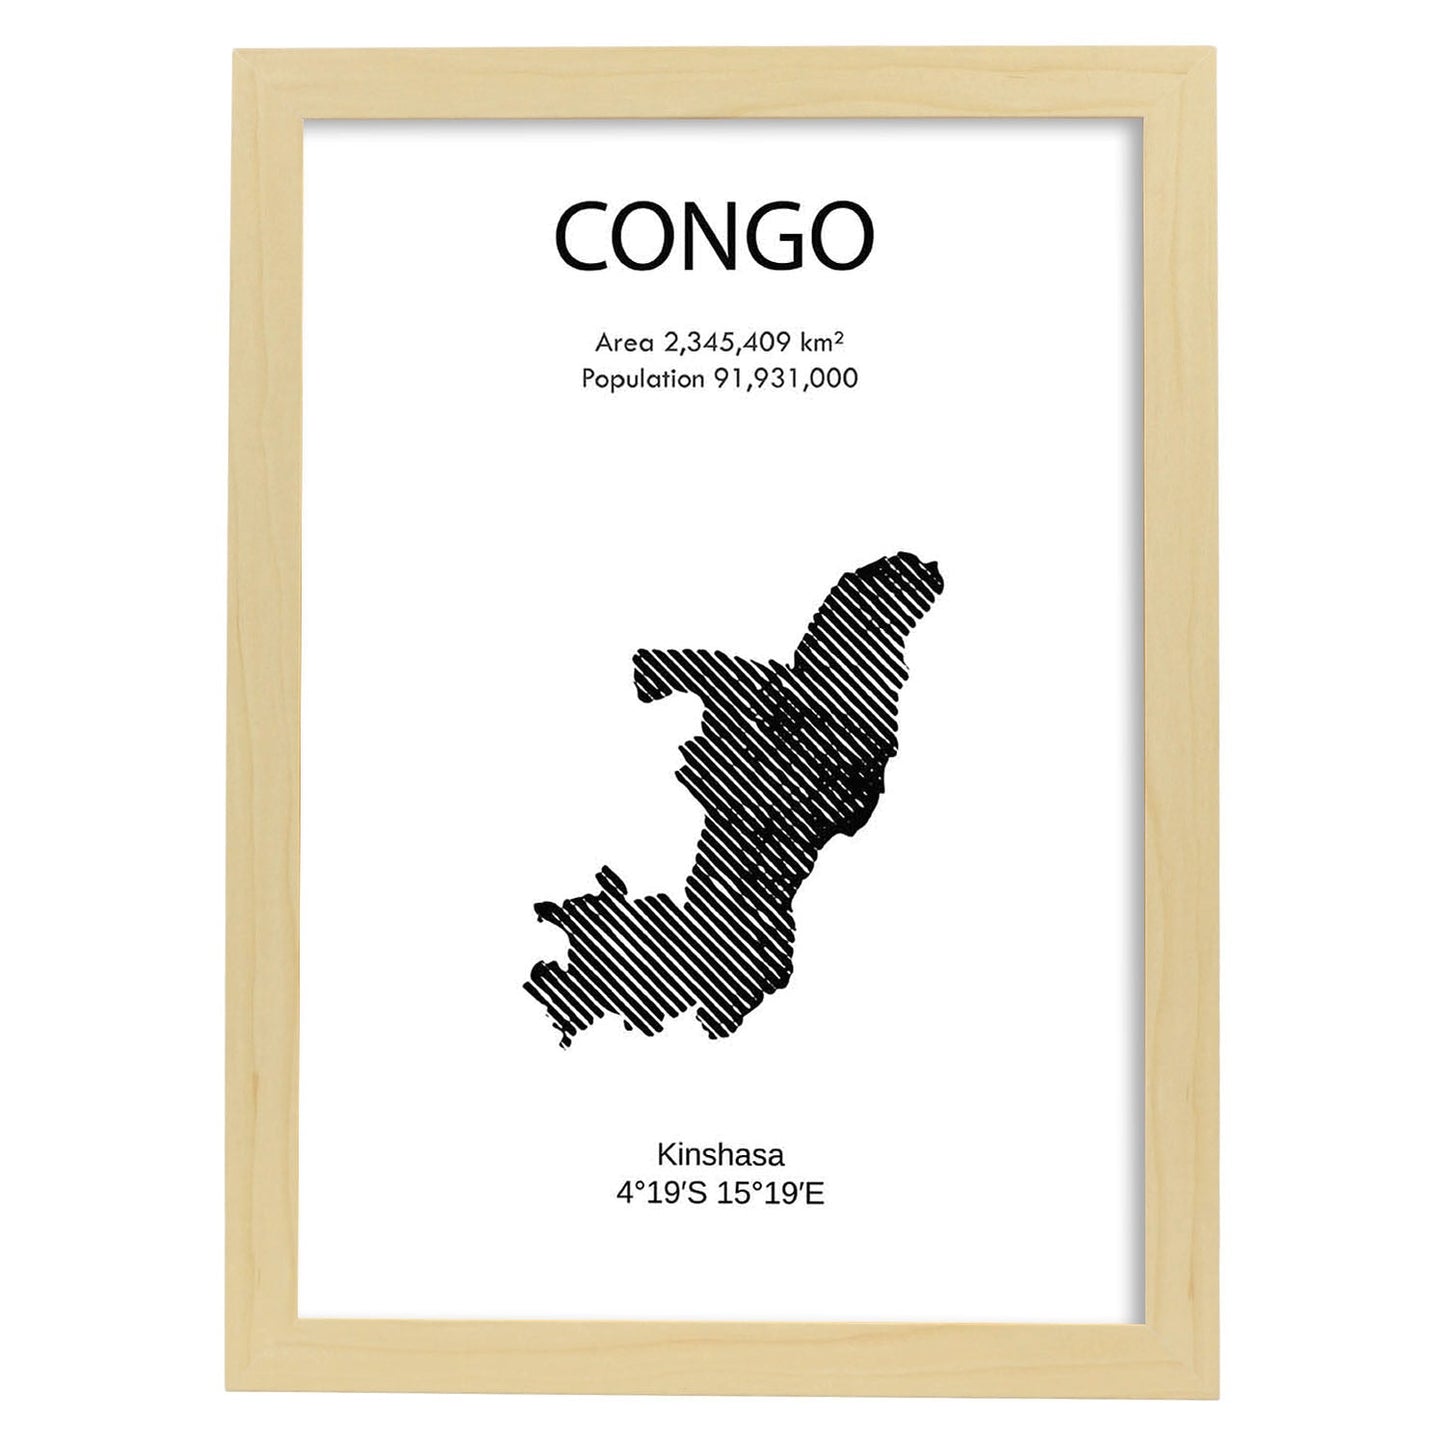 Poster de Congo. Láminas de paises y continentes del mundo.-Artwork-Nacnic-A4-Marco Madera clara-Nacnic Estudio SL